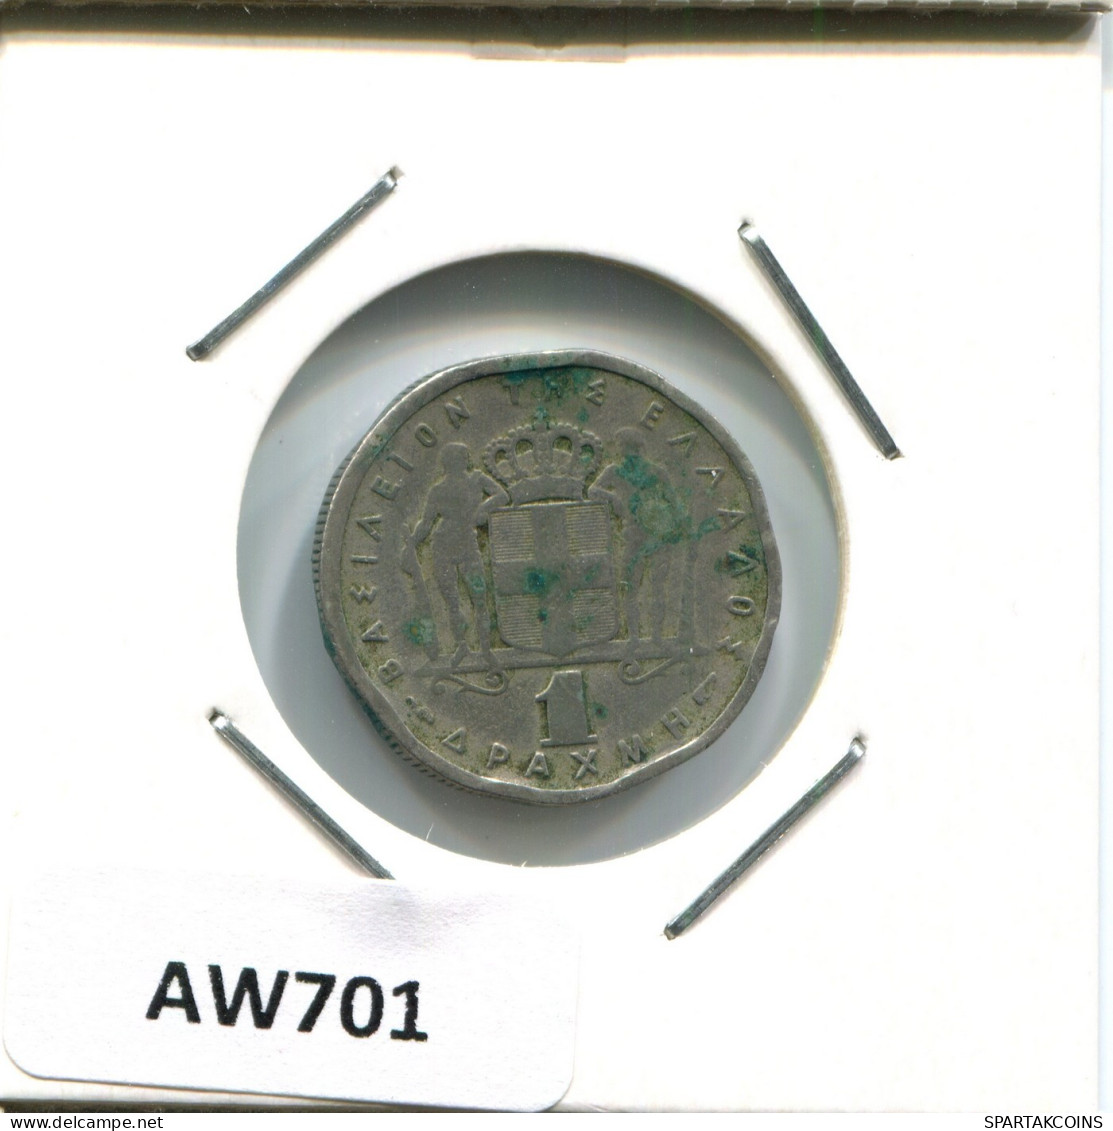 1 DRACHMA 1954 GREECE Coin #AW701.U.A - Greece